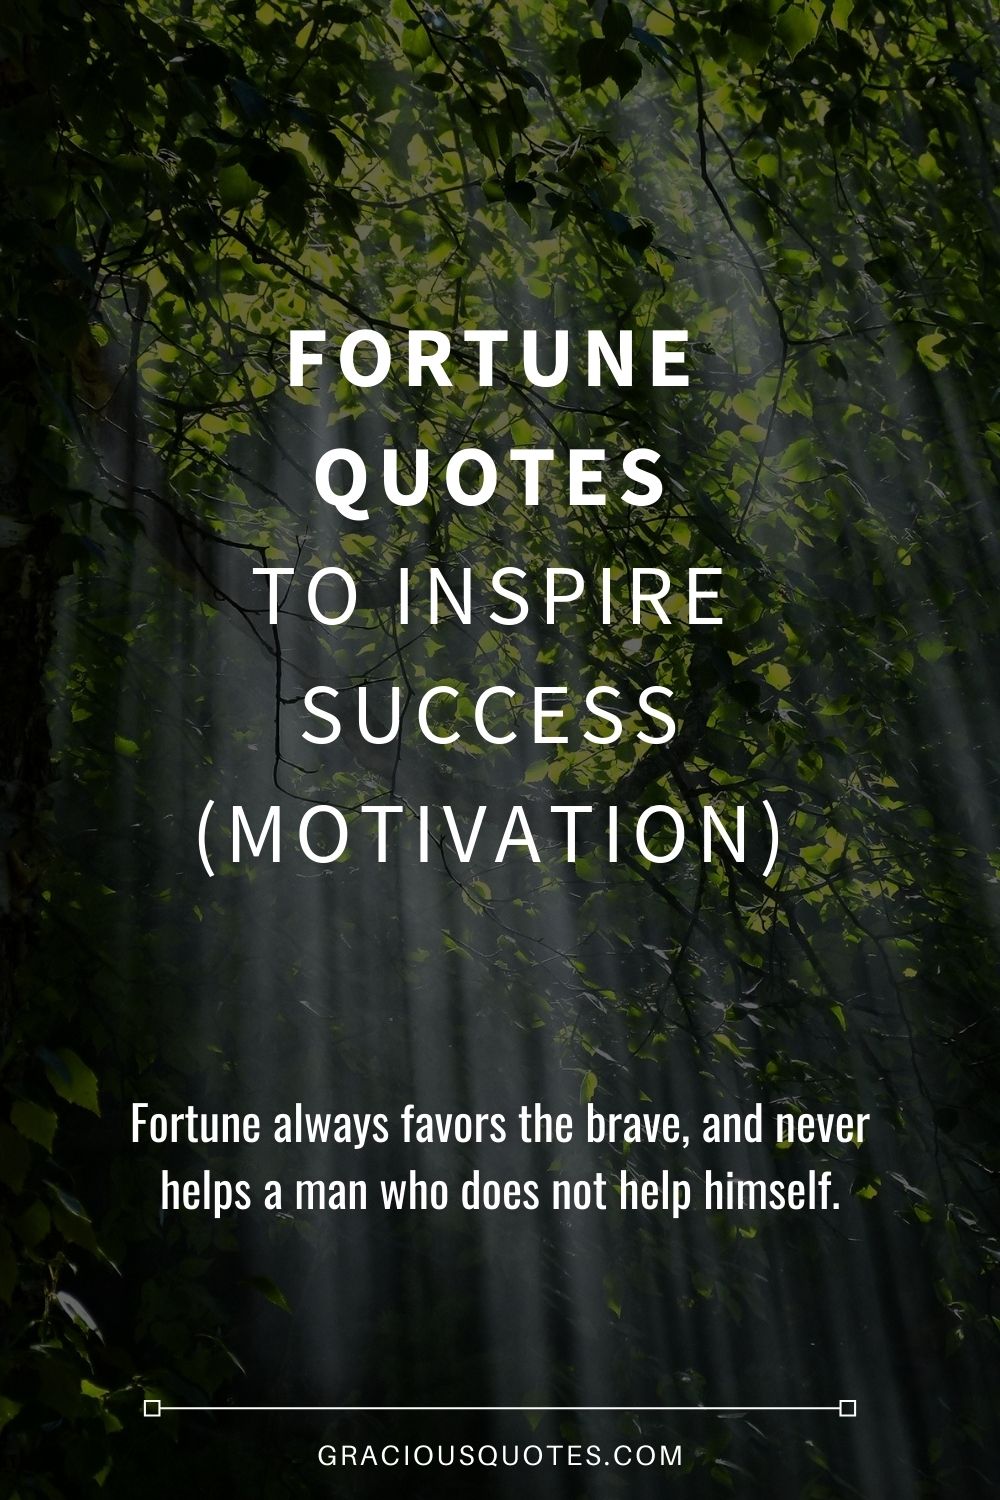 Fortune Quotes to Inspire Success (MOTIVATION) - Gracious Quotes